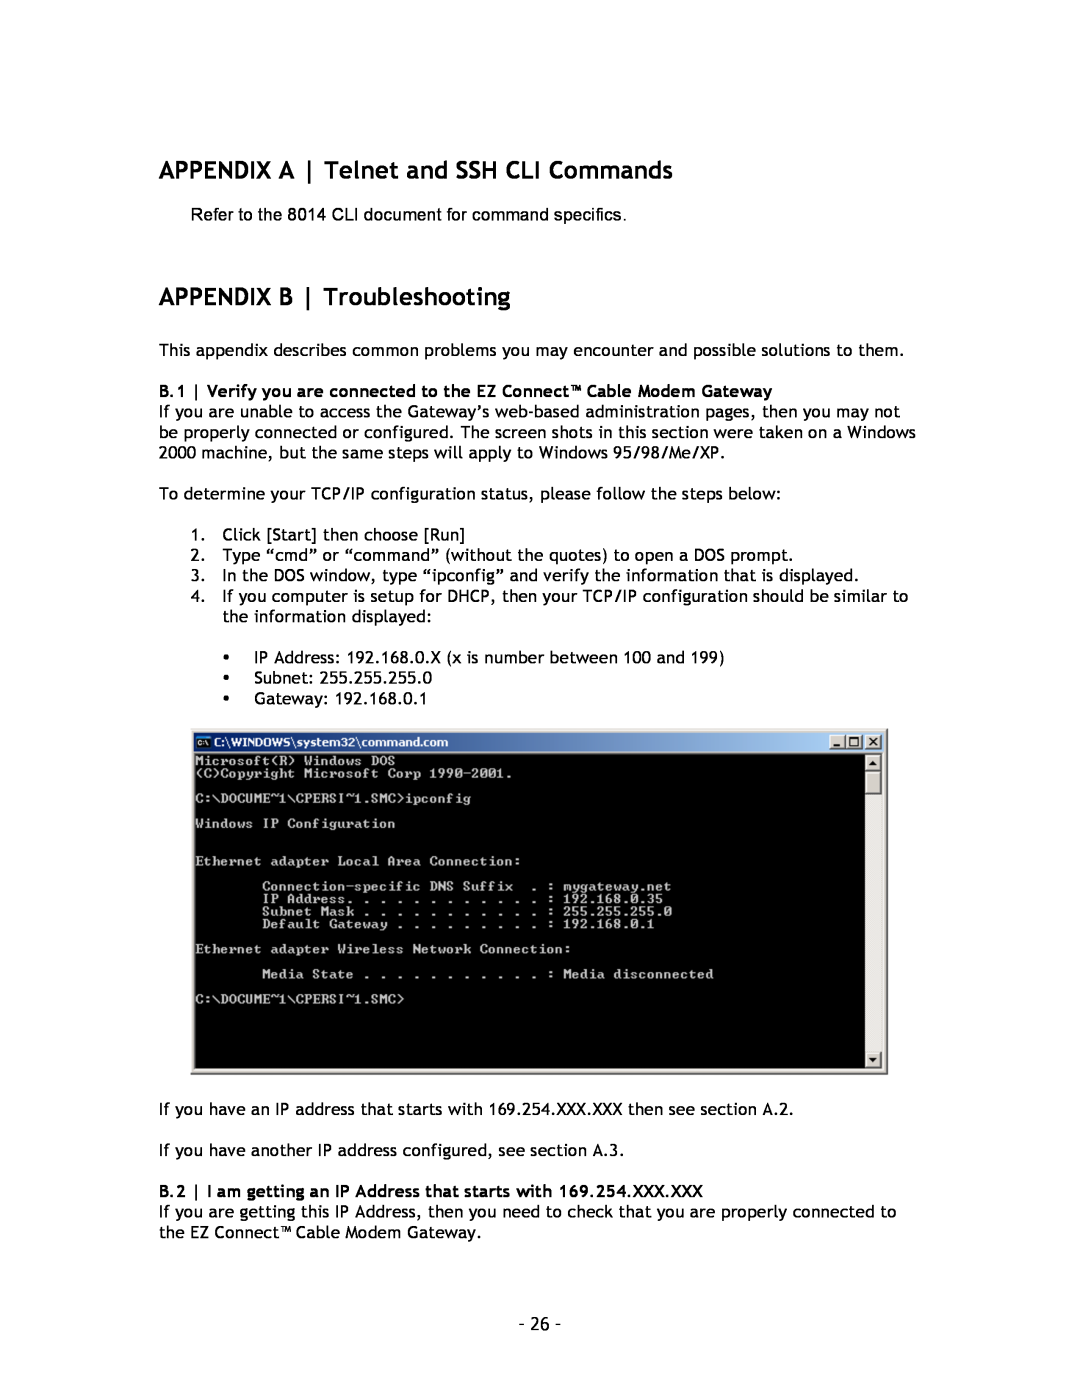 SMC Networks SMC8014 manual APPENDIX A Telnet and SSH CLI Commands, APPENDIX B Troubleshooting 